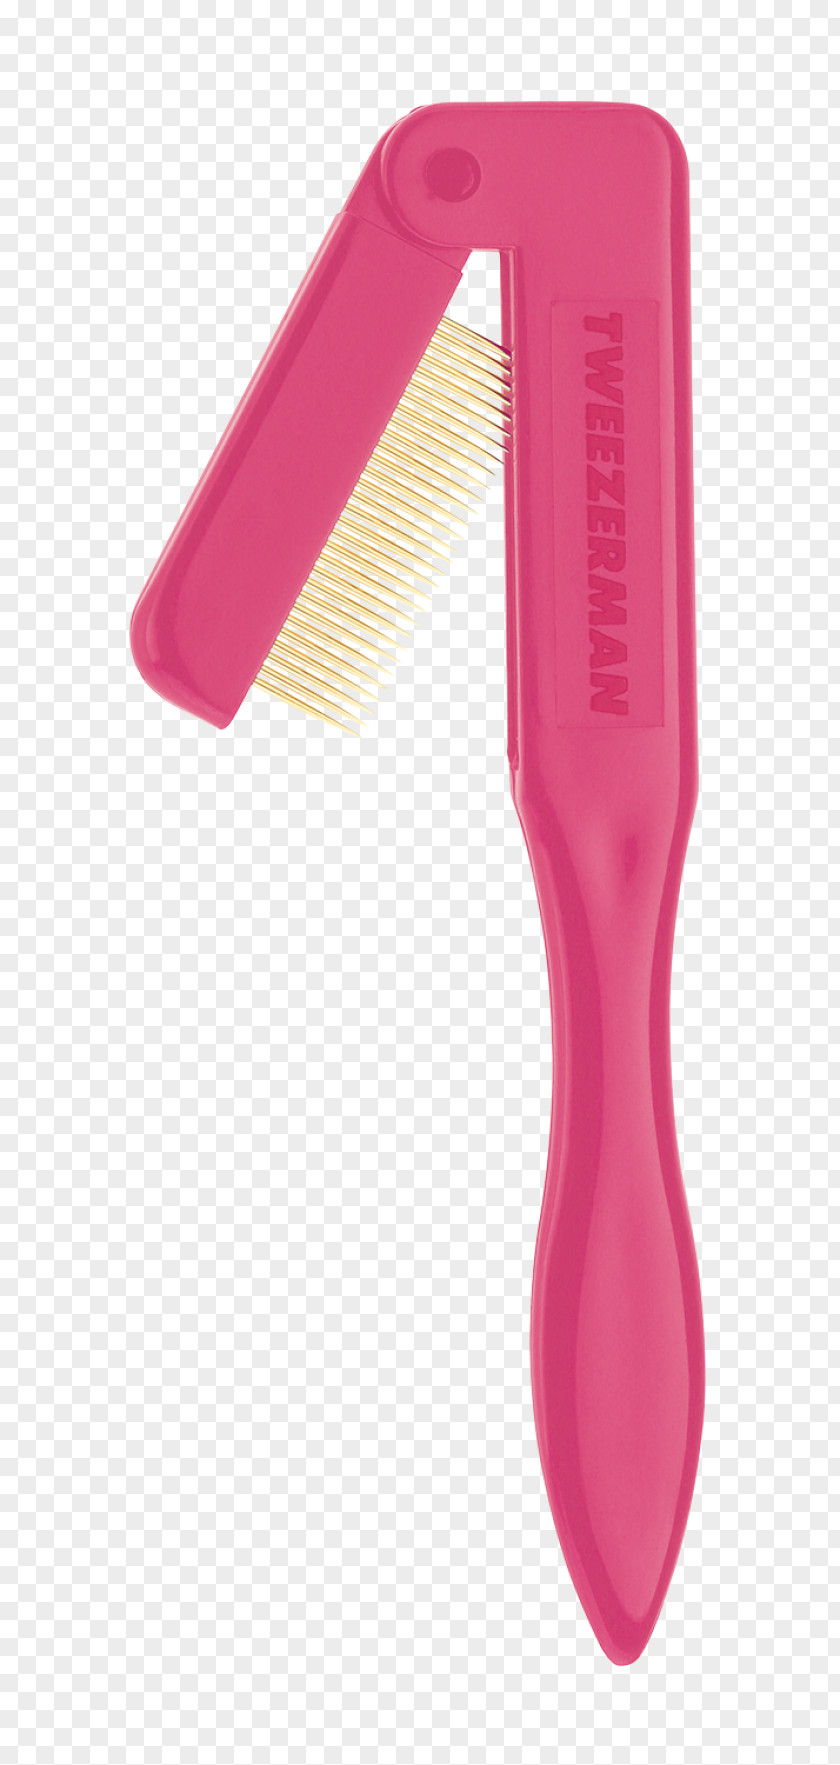 Comb Over Hairstyle Products Tweezerman Folding Ilashcomb Eyelash Lashes By Eye Lash PNG